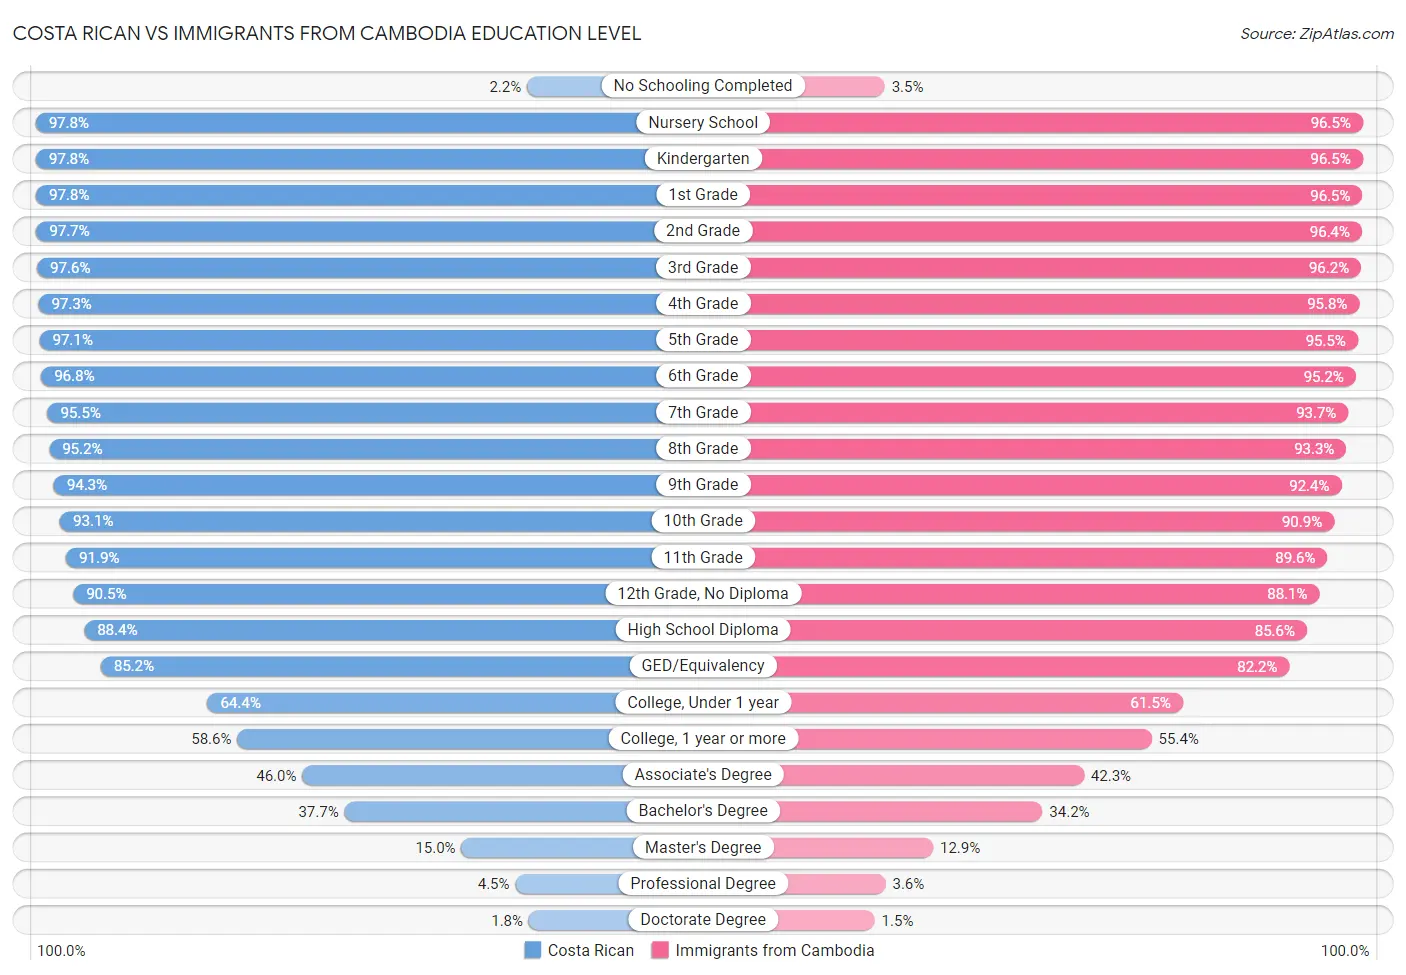 Costa Rican vs Immigrants from Cambodia Education Level